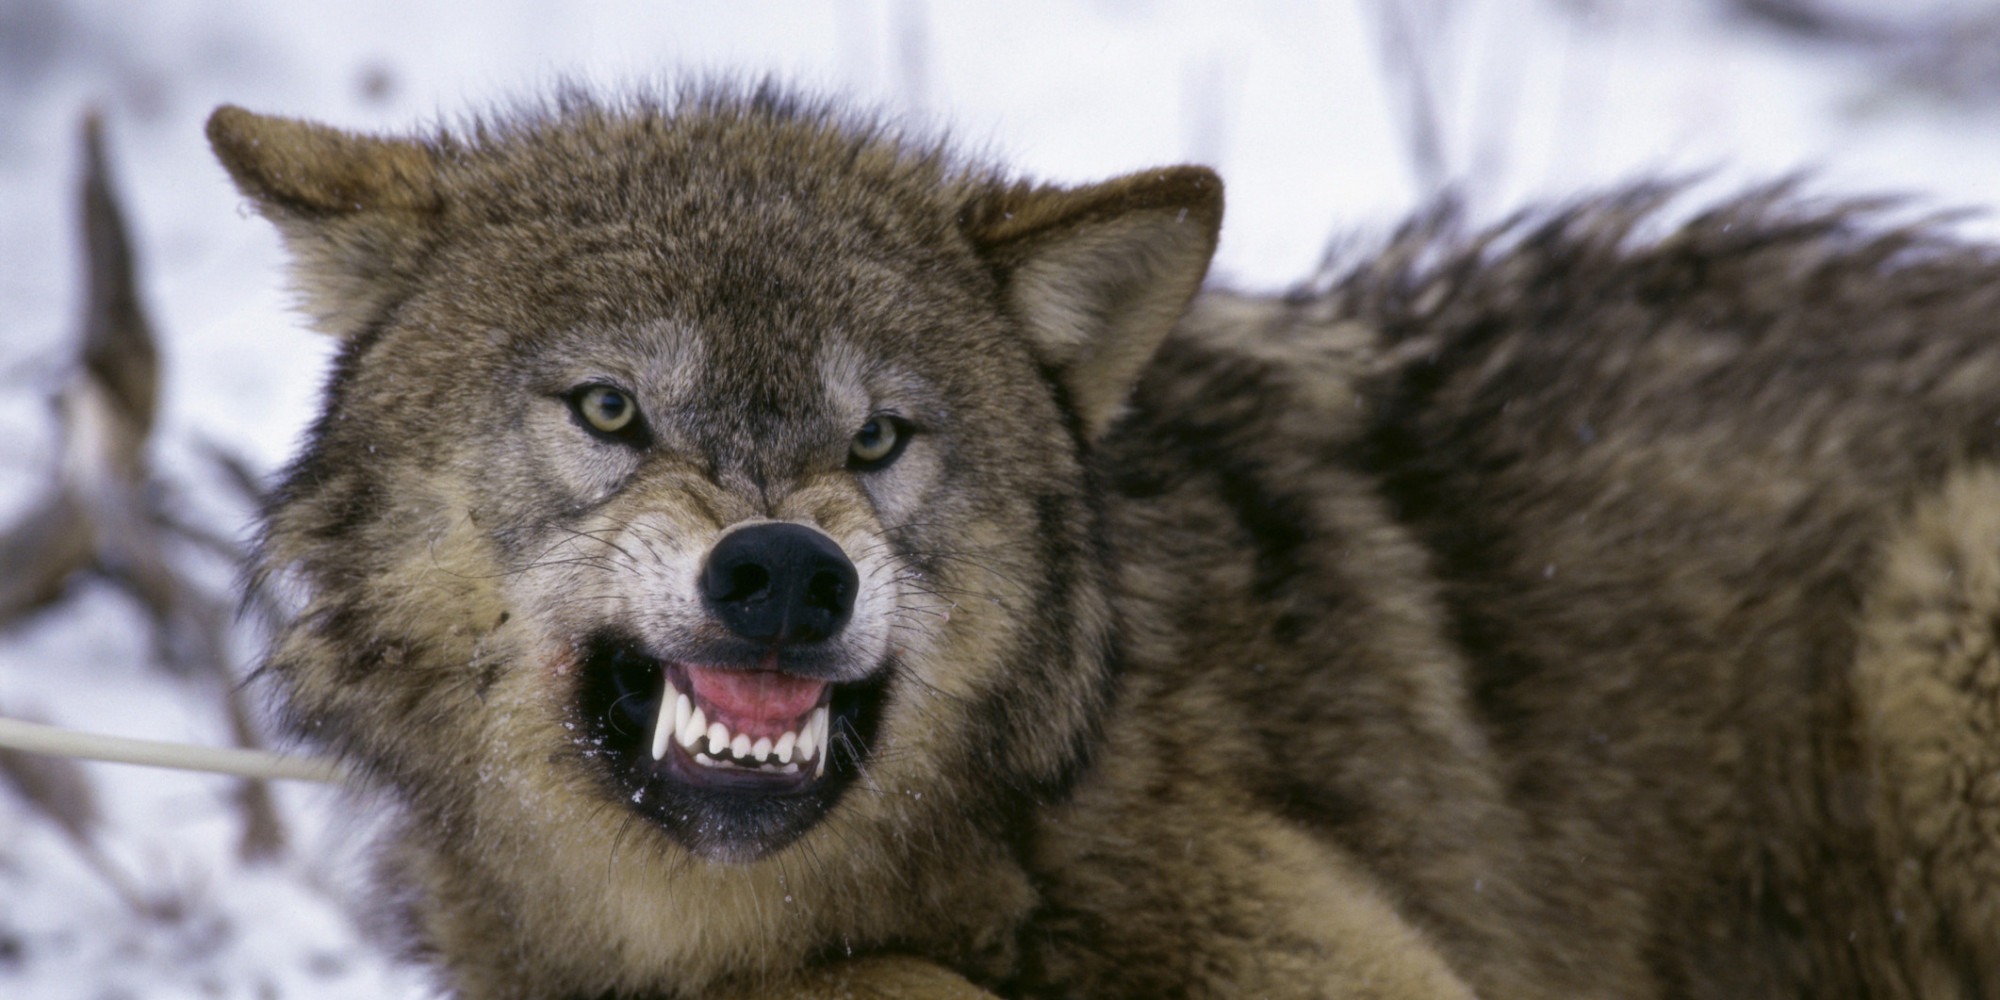 Wolf attacks